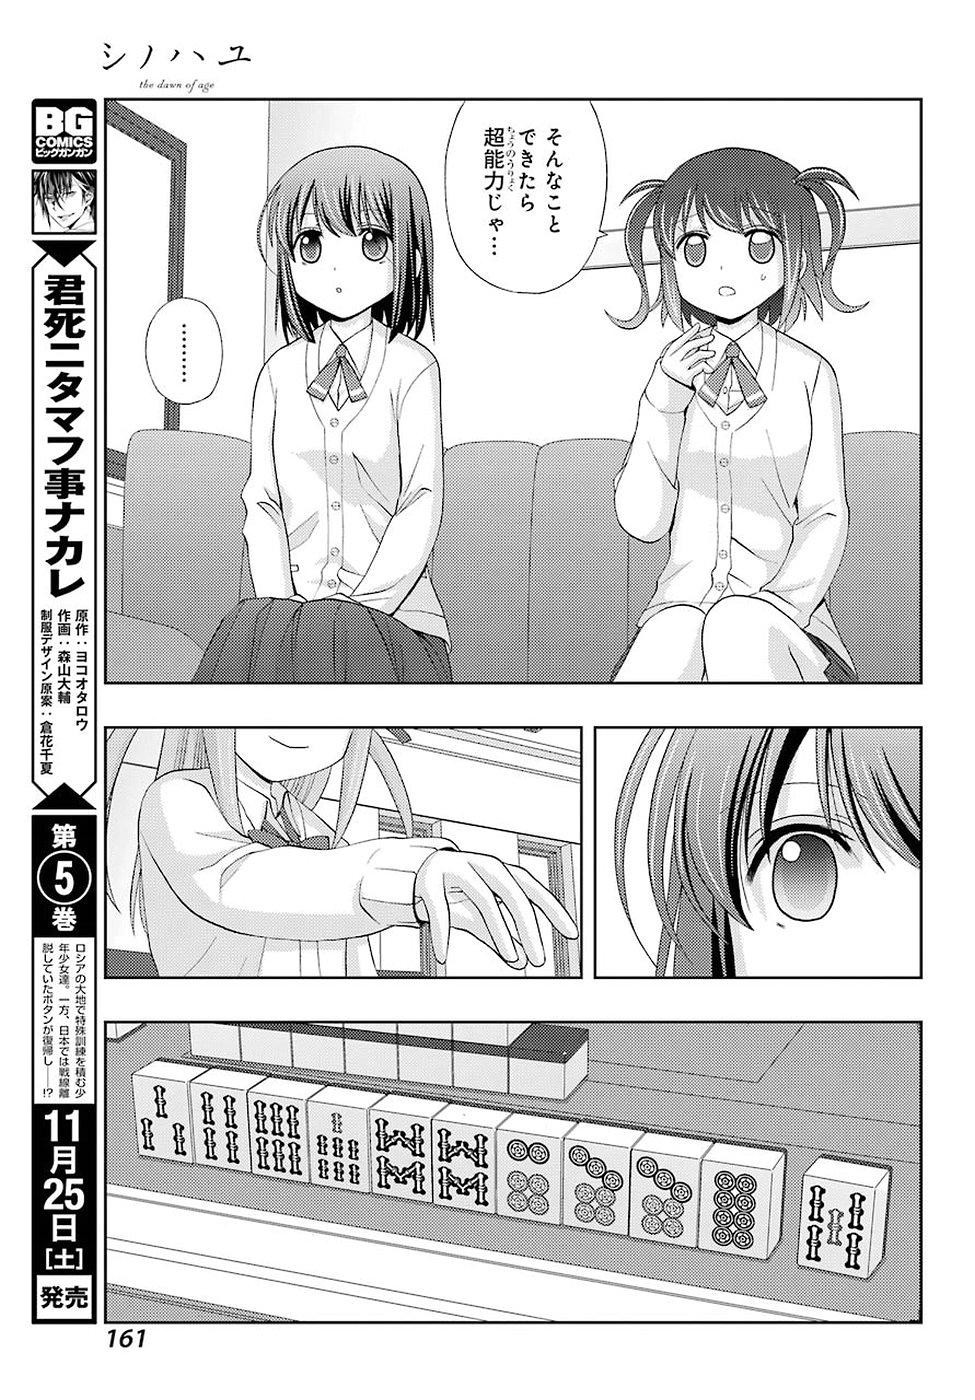 Shinohayu - The Dawn of Age Manga - Chapter 051 - Page 21